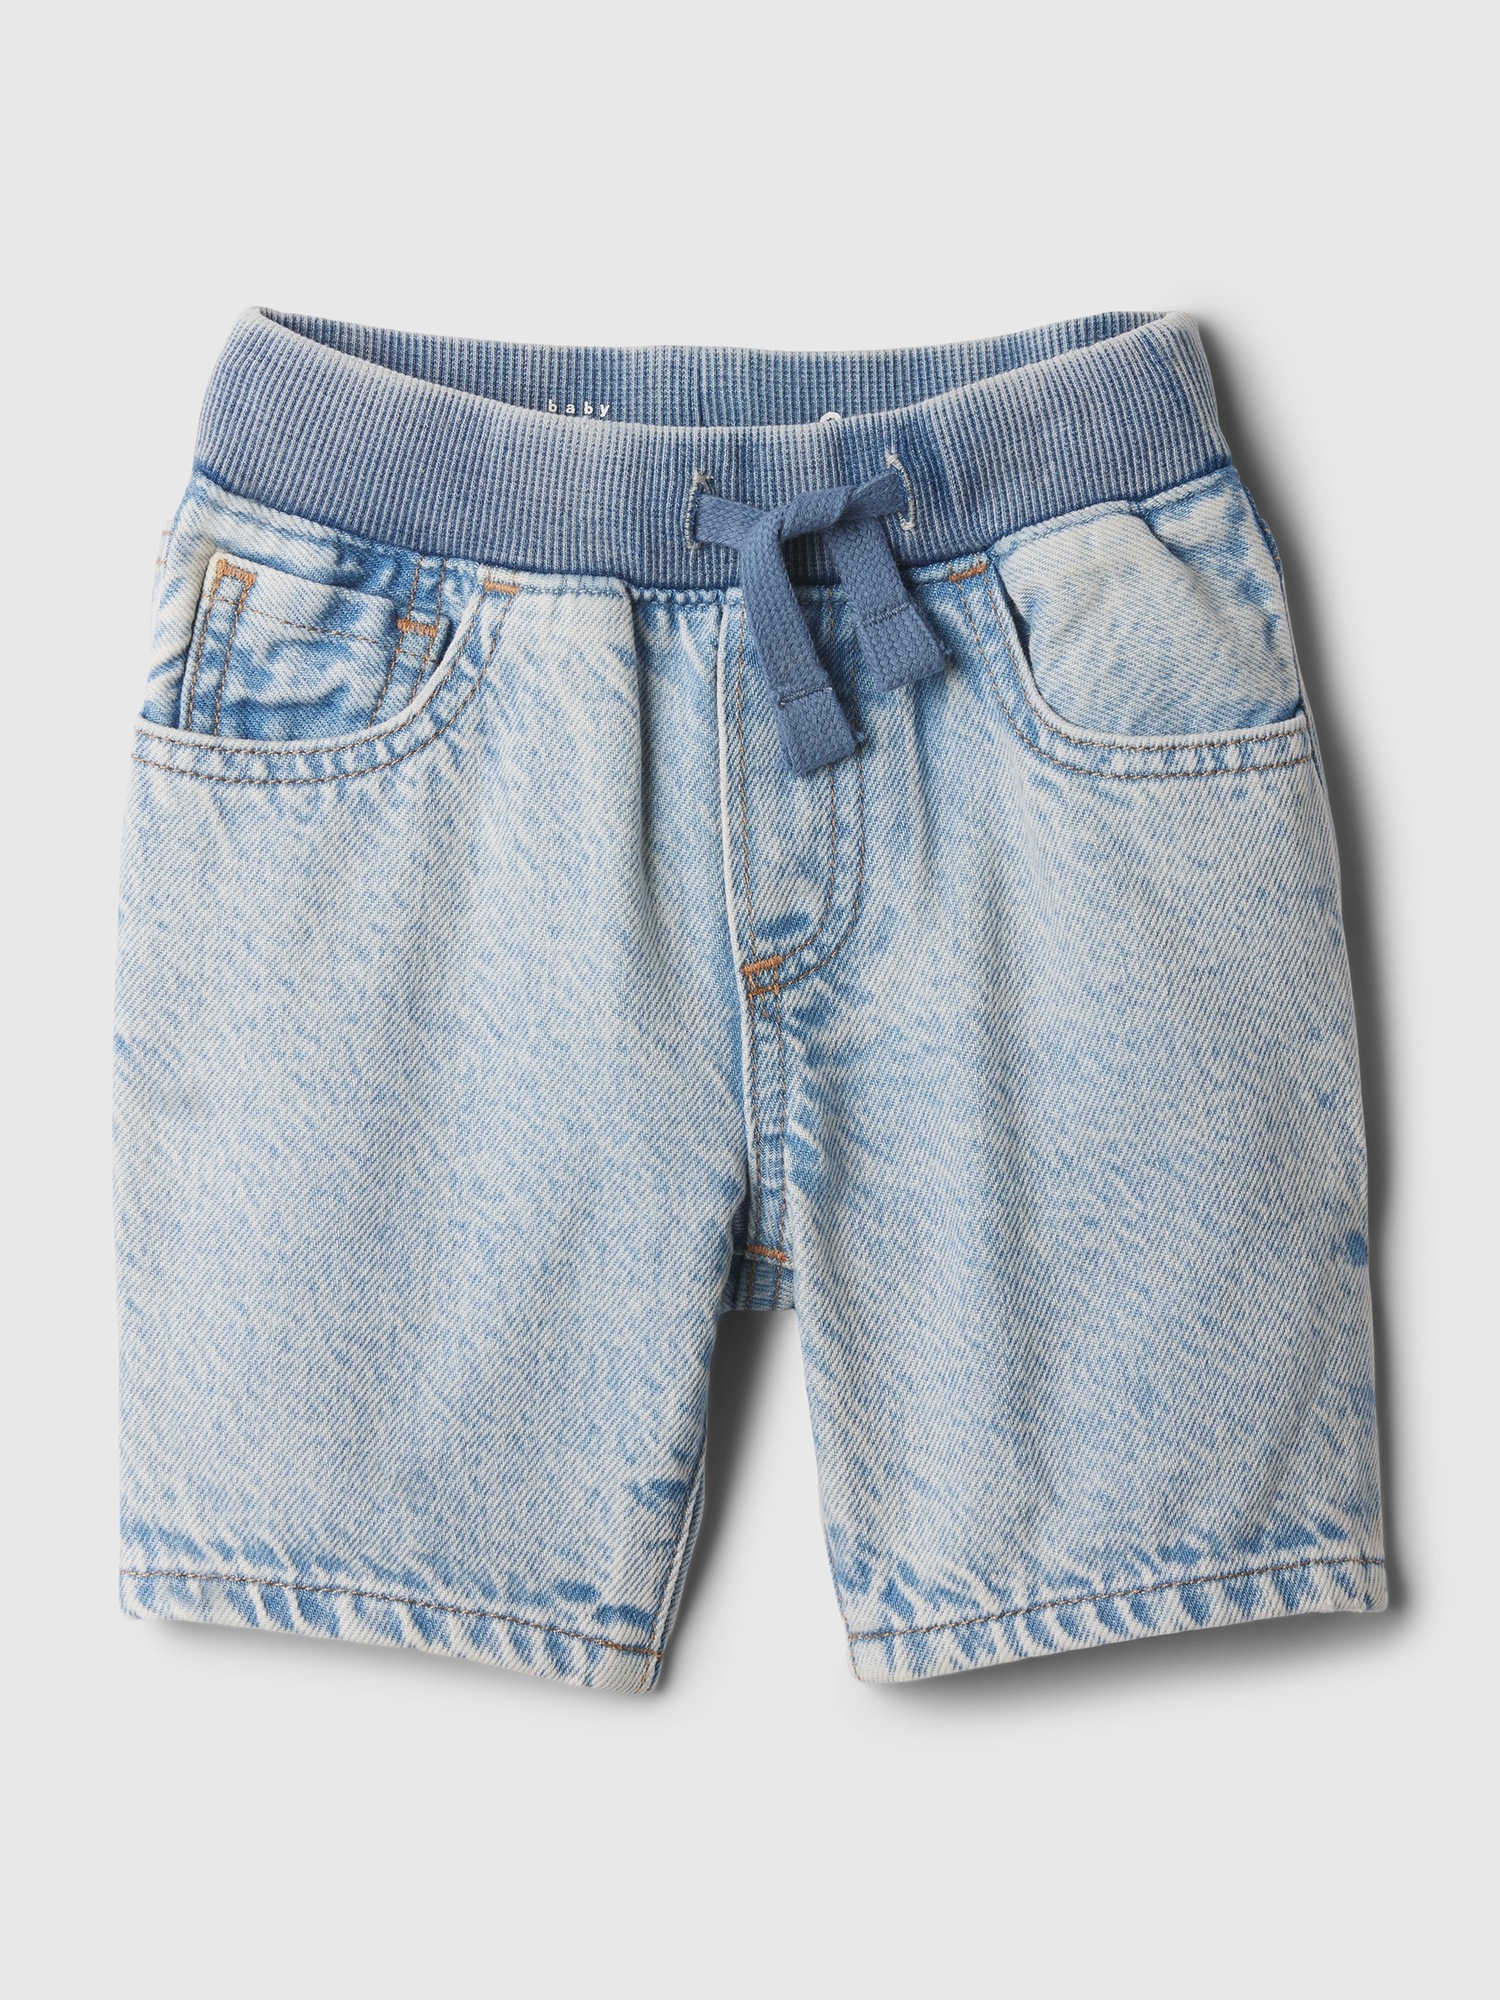 GenesinlifeShops PG - Monnalisa Girls Denim Shorts for Kids - Blue Wear  under jeans going for a walk PS Paul Smith